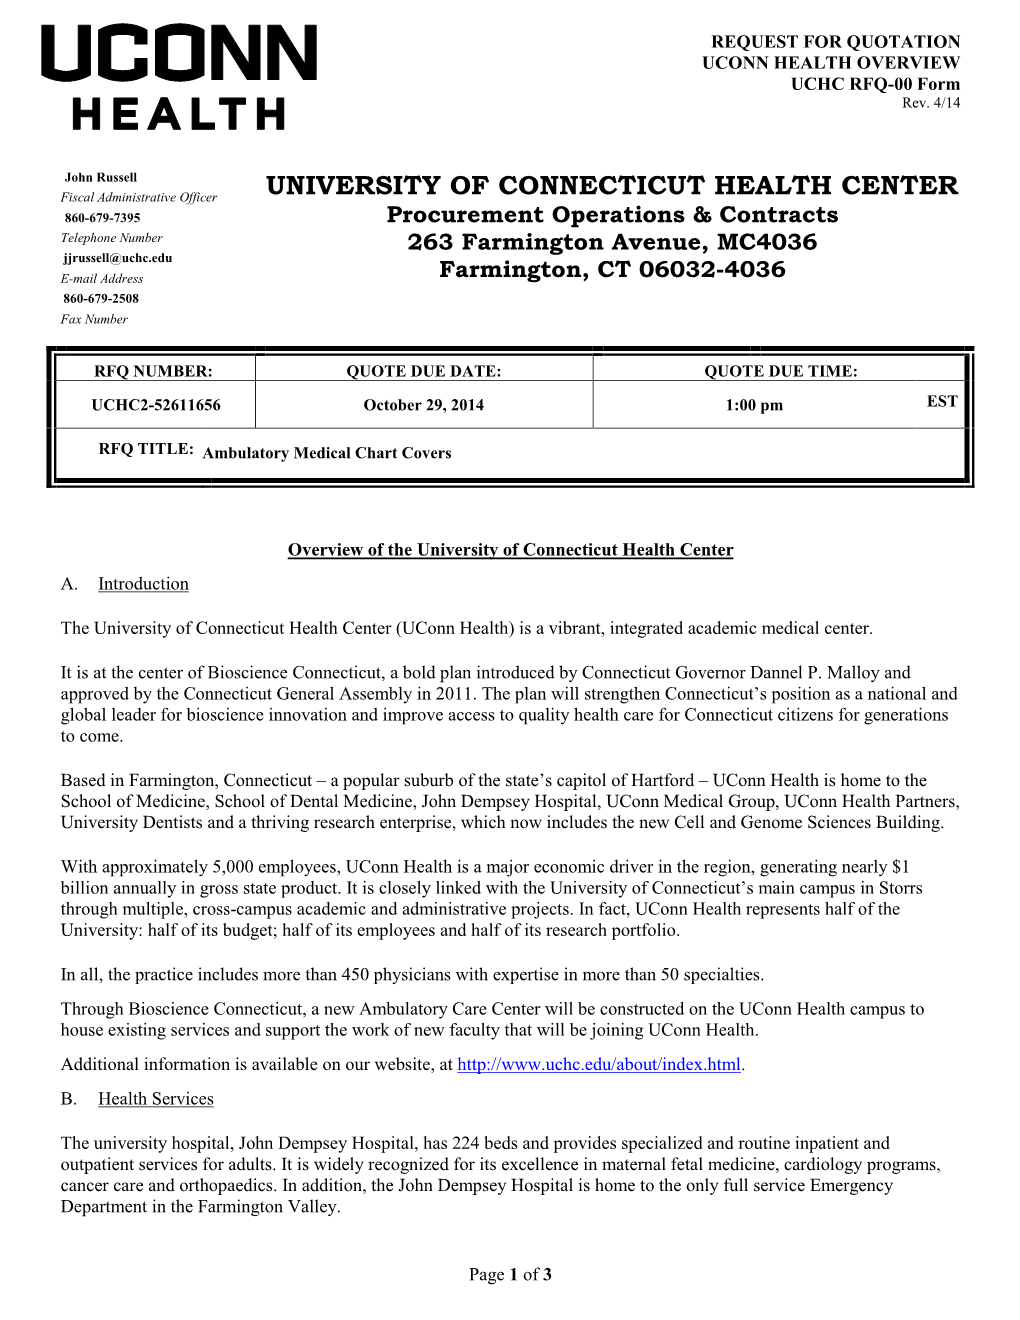 UNIVERSITY of CONNECTICUT HEALTH CENTER Procurement Operations & Contracts Telephone Number 263 Farmington Avenue, MC4036